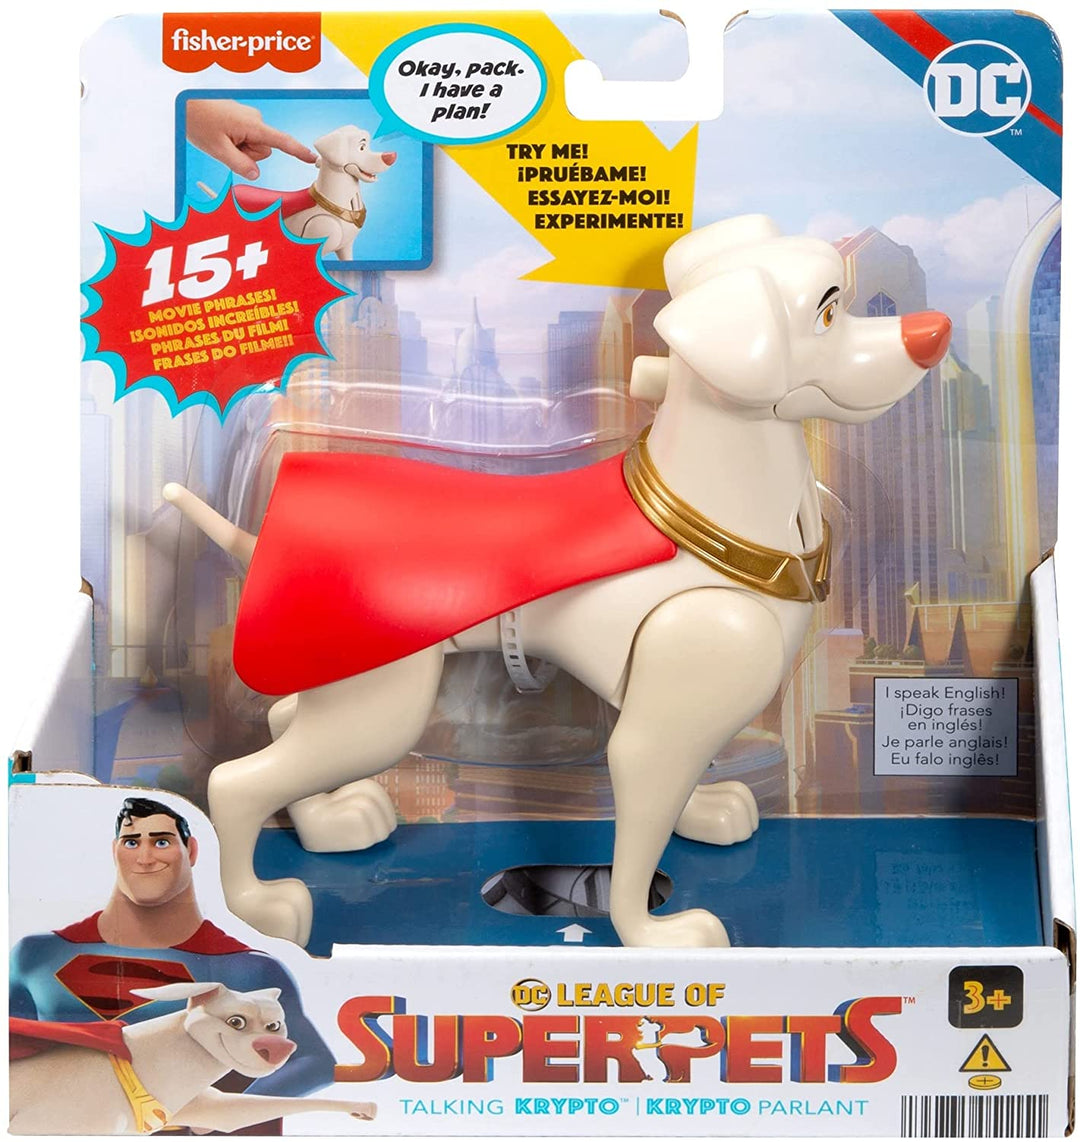 Fisher-Price DC League of Super-Pets sprechende Krypto-Figur